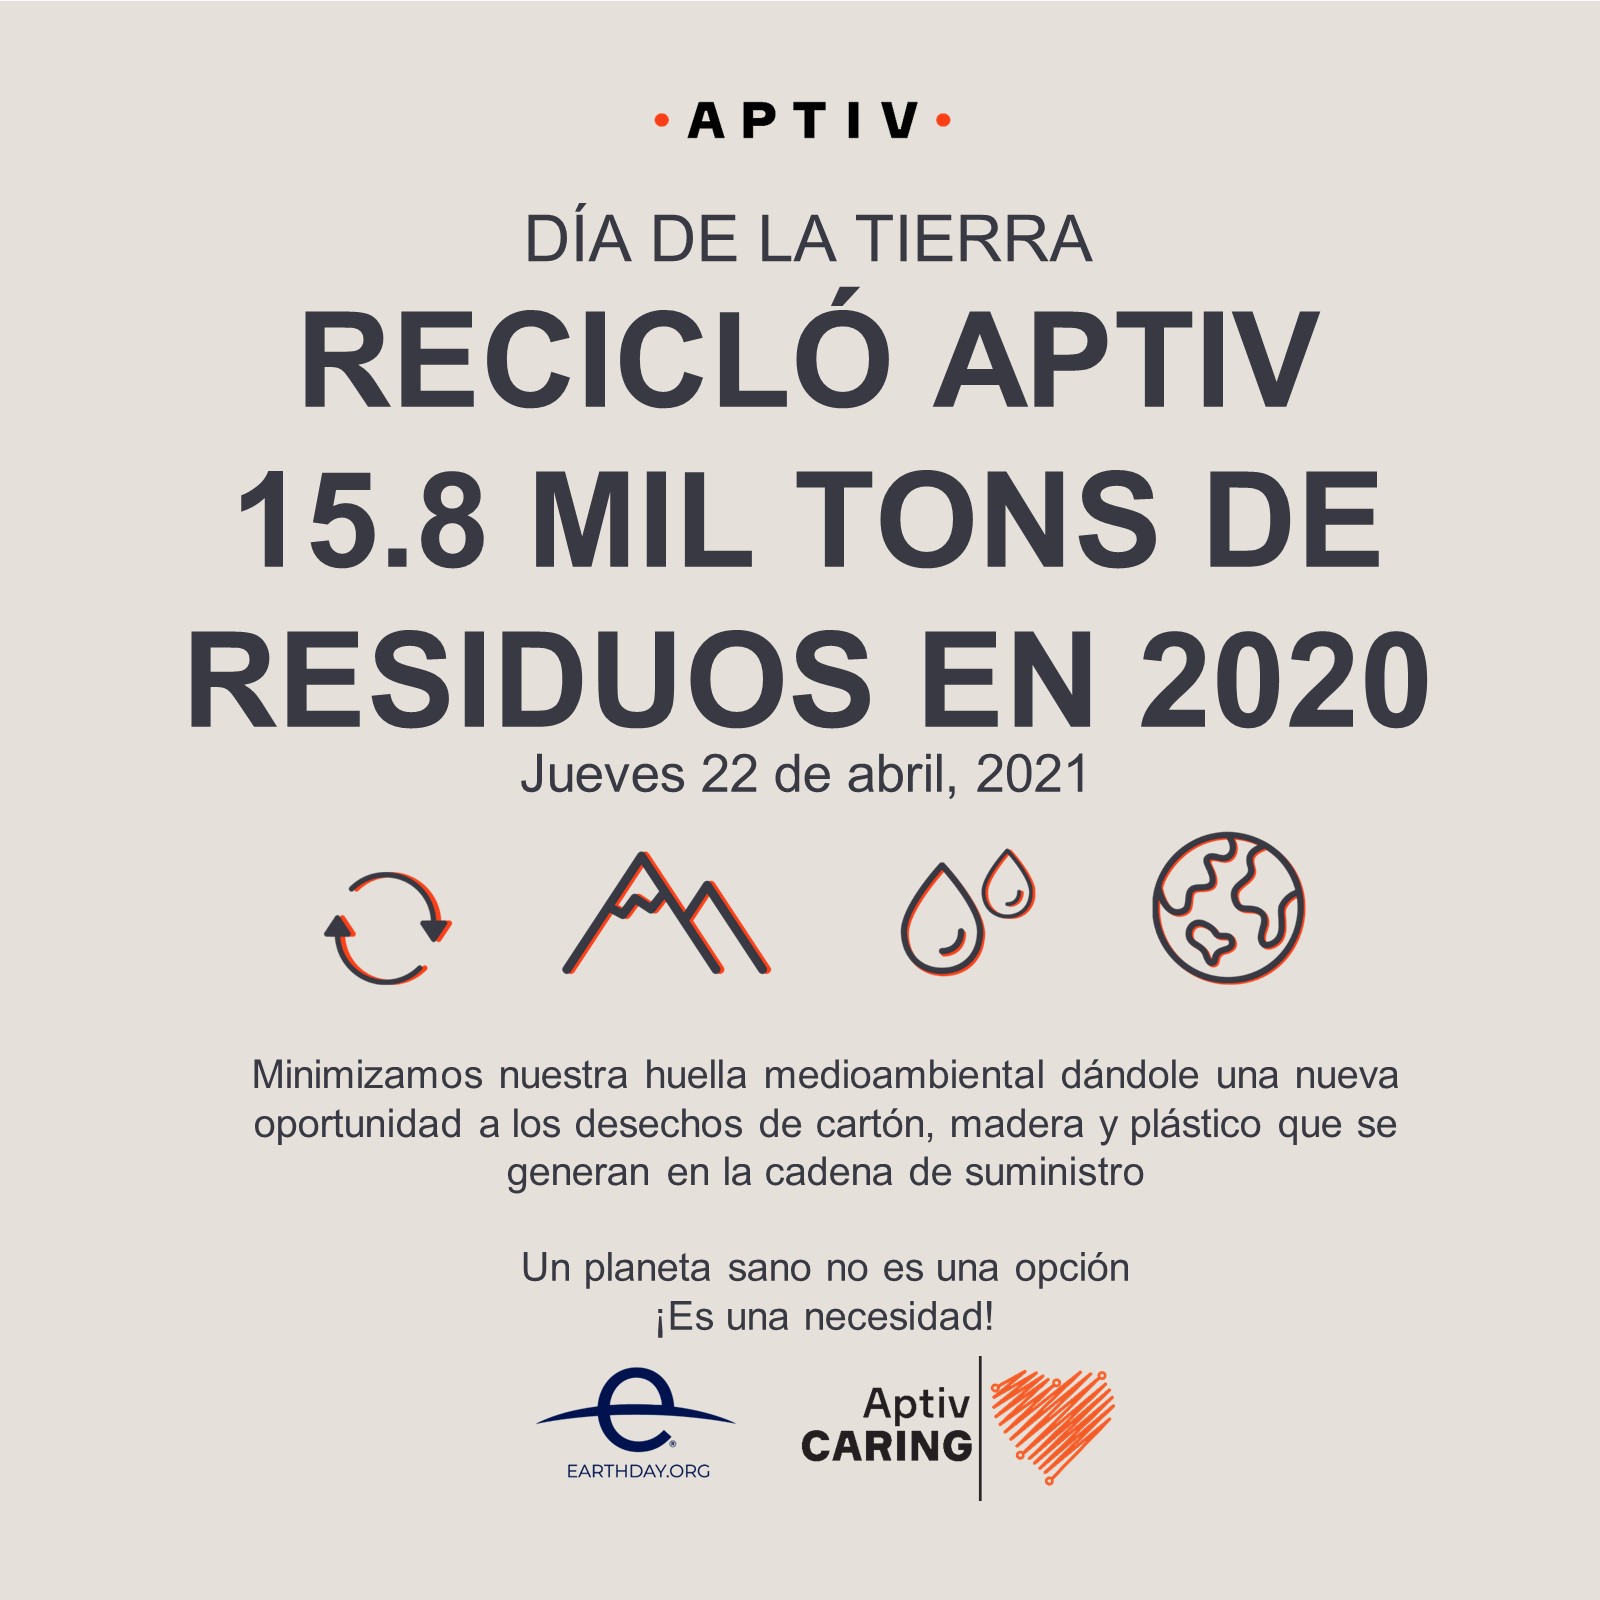 Recicló Aptiv 15.8 mil toneladas de residuos en 2020